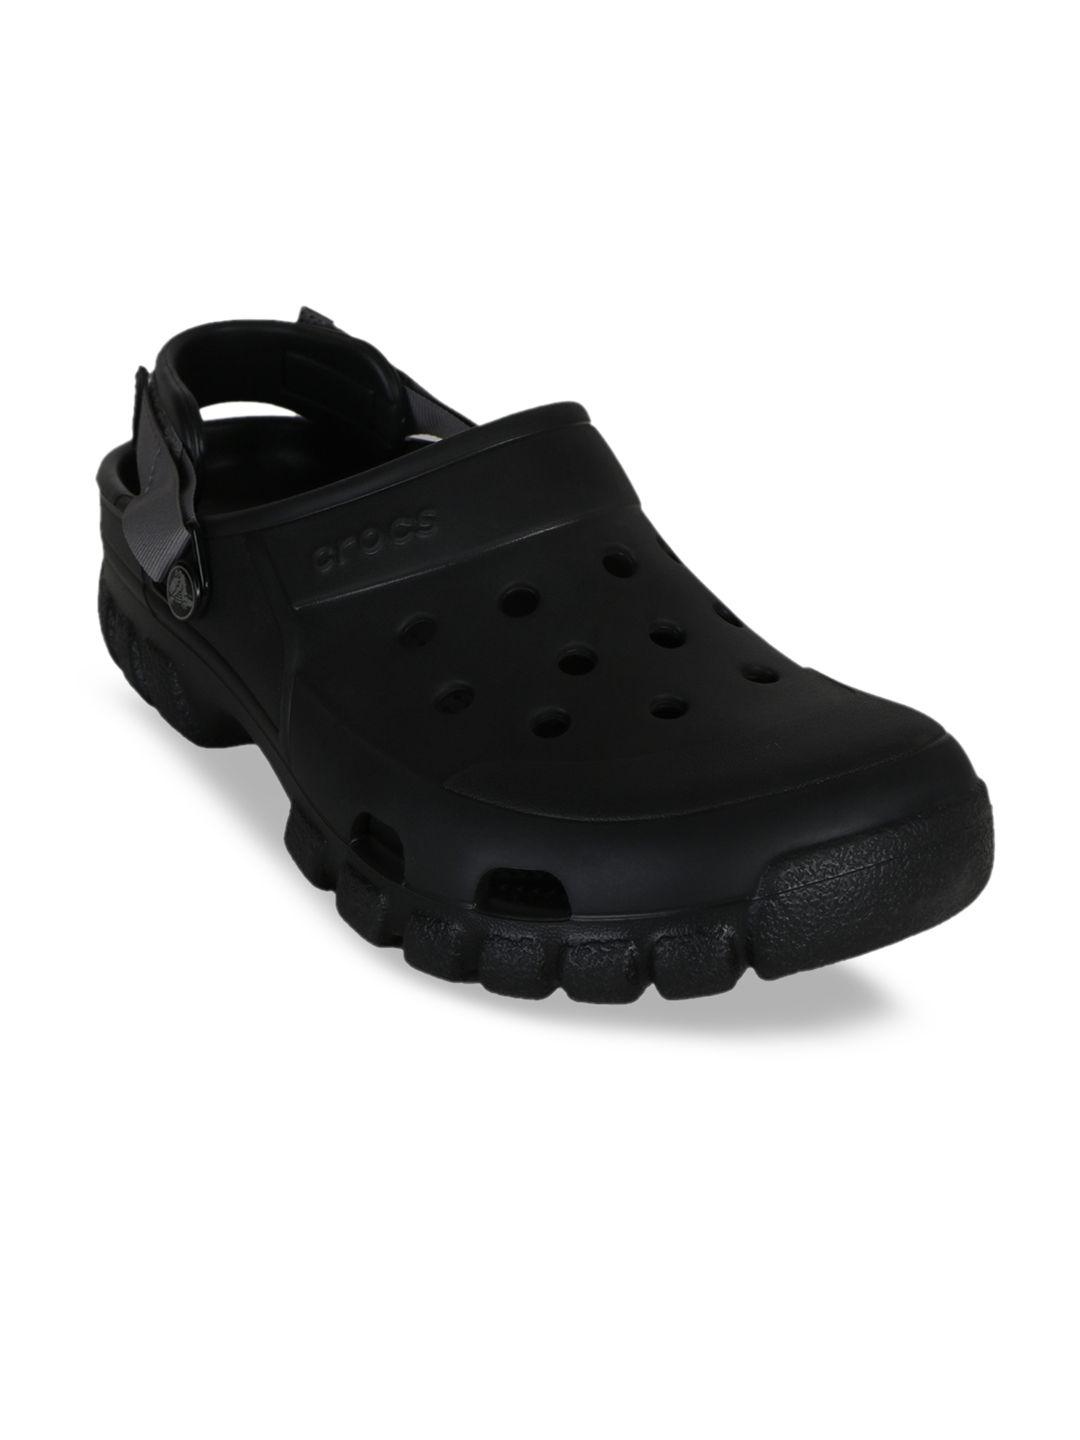 crocs unisex black sandals